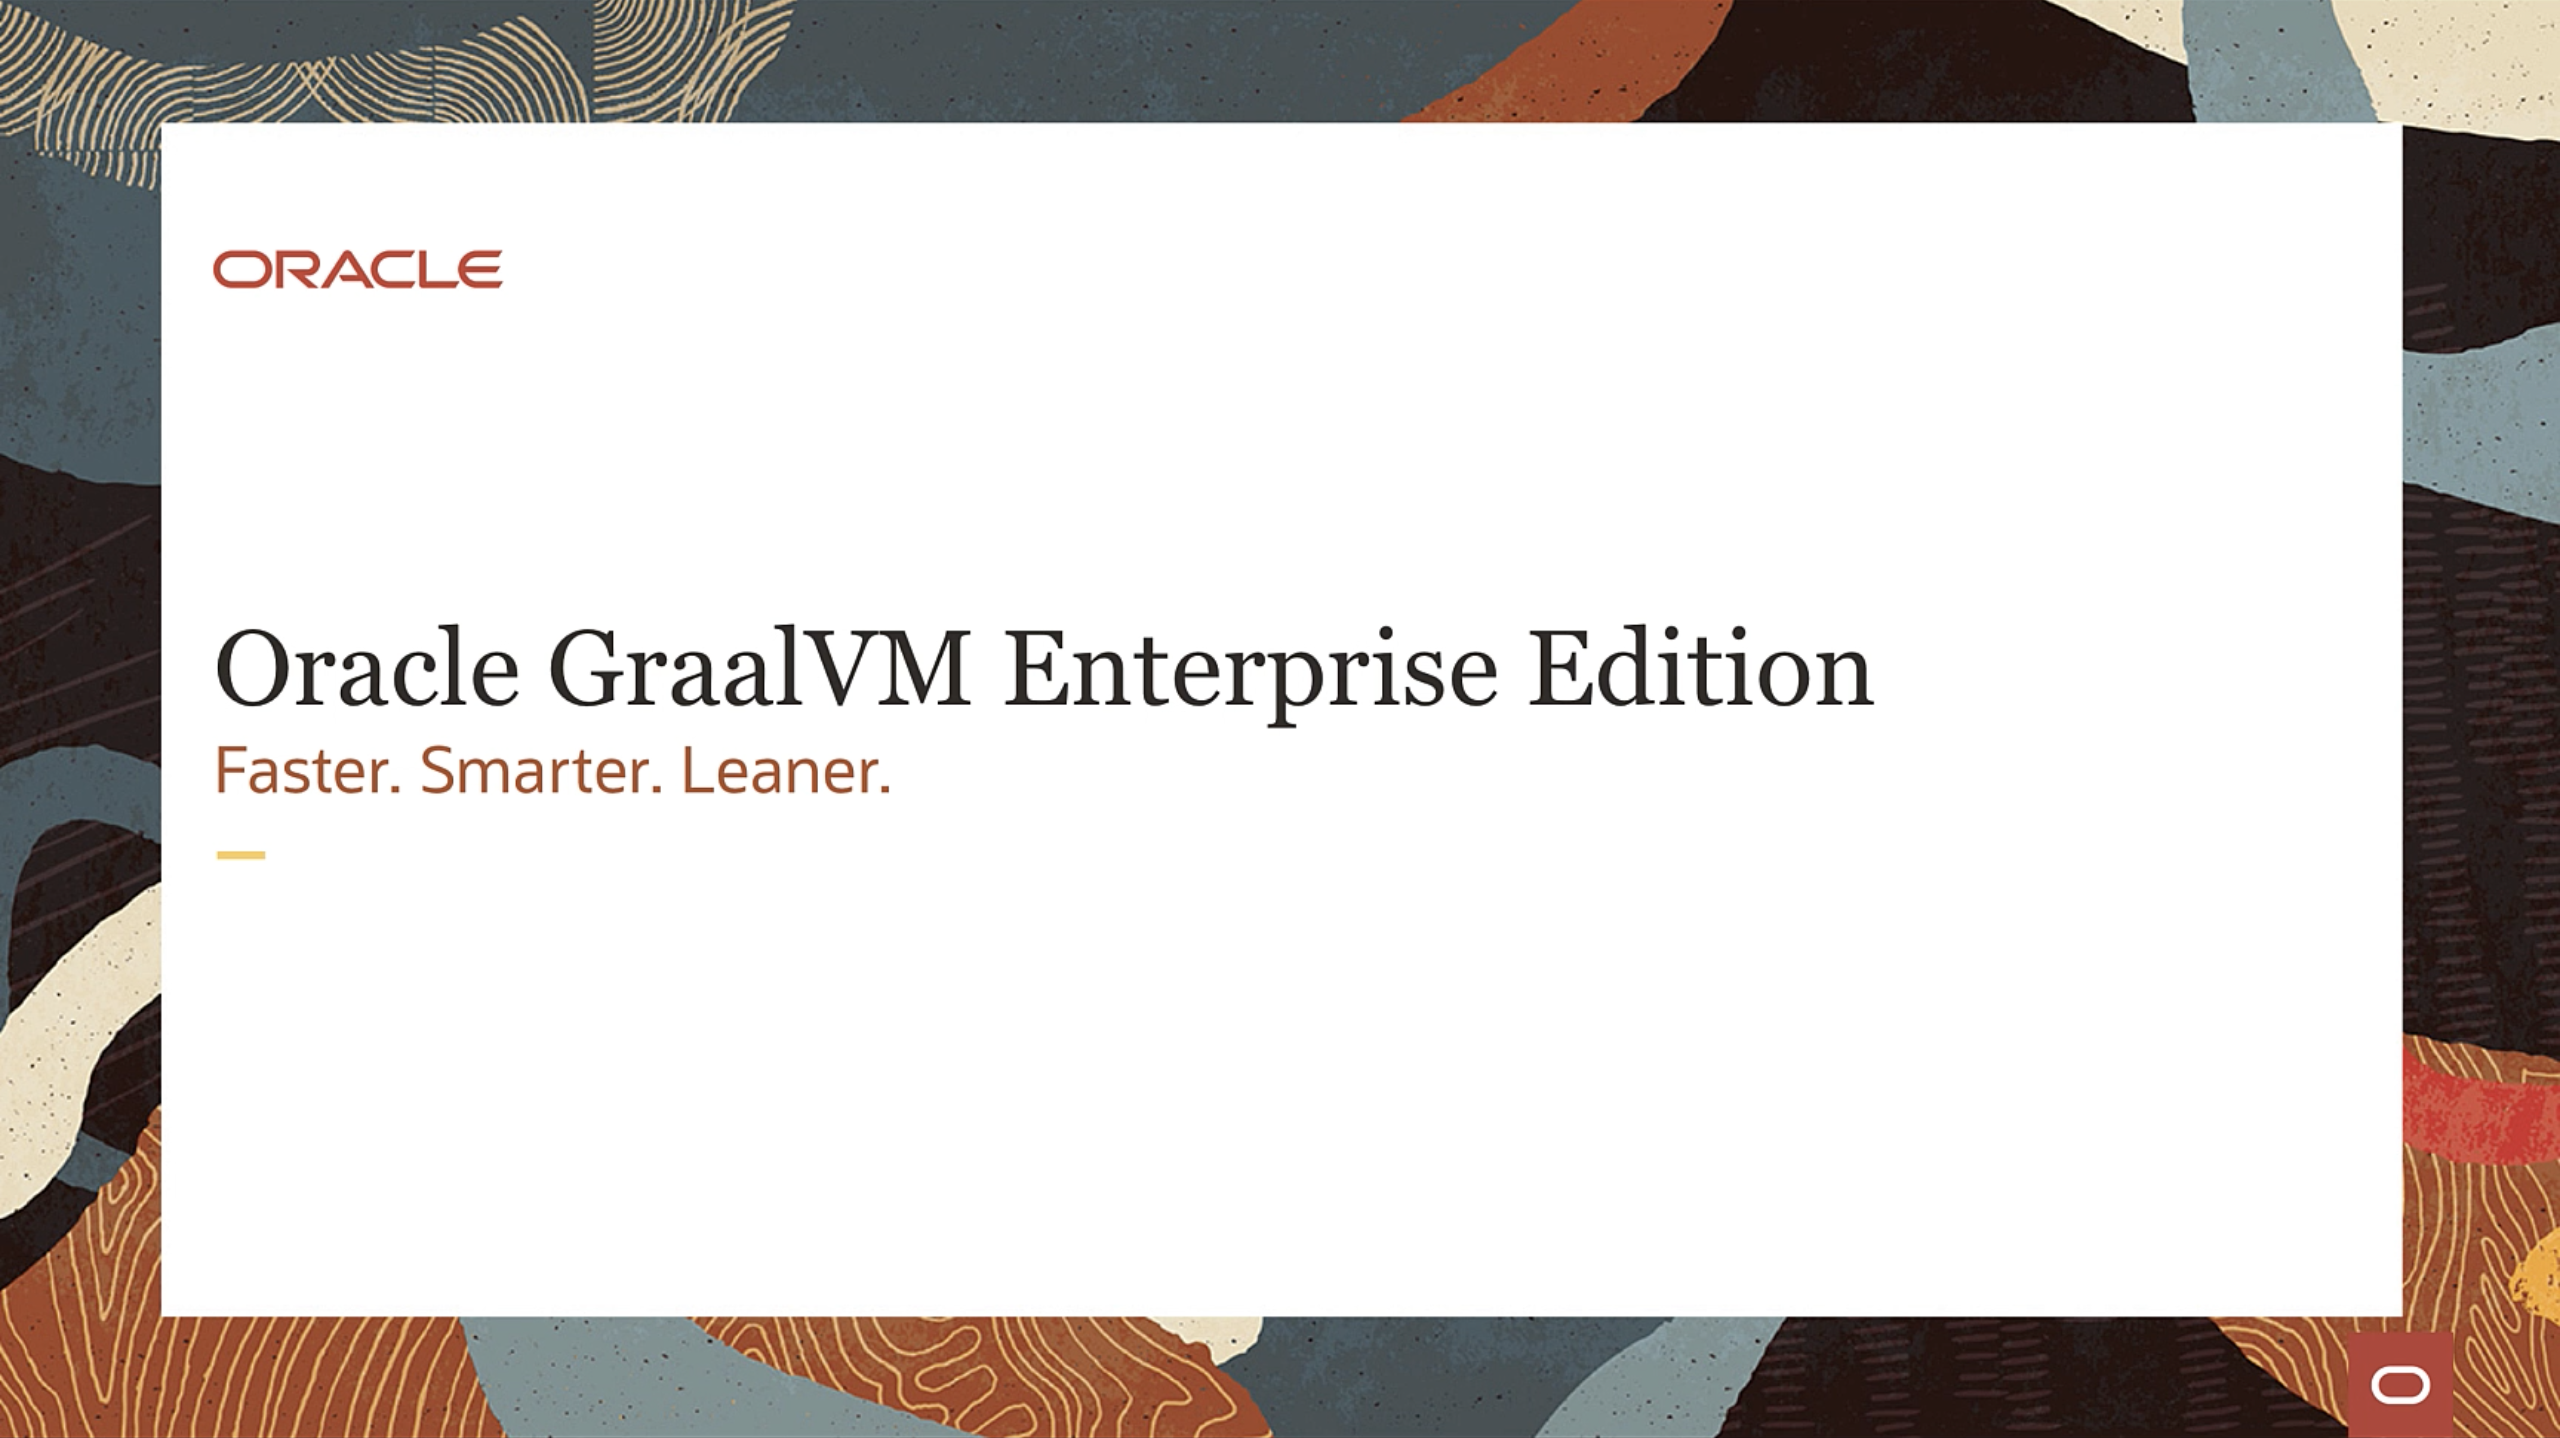 Screenshot 2020 10 10 at 20.22.08 - Webcast: GraalVM Enterprise Overview and Demo